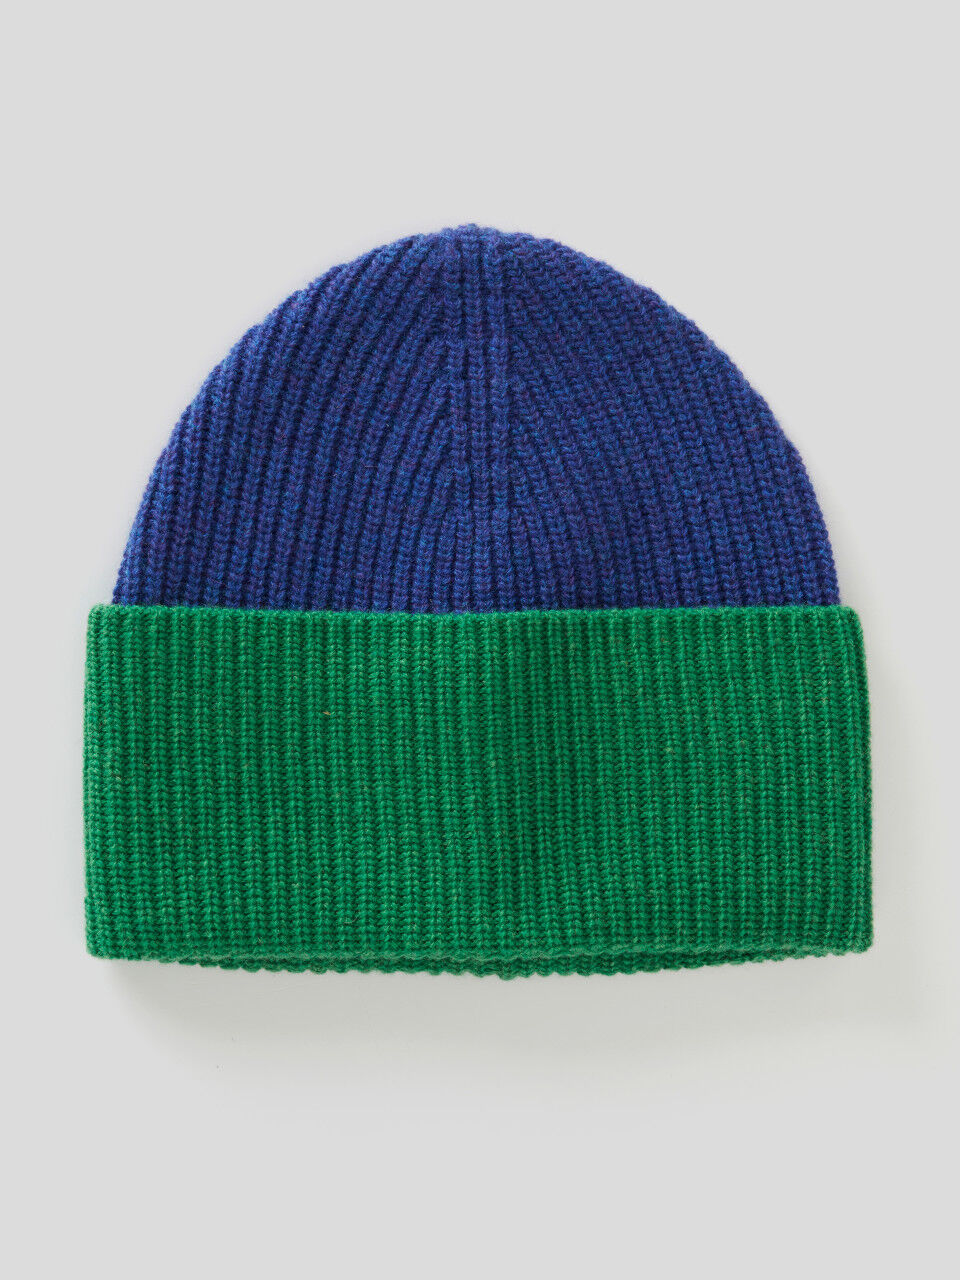 Two-tone hat in pure Merino wool